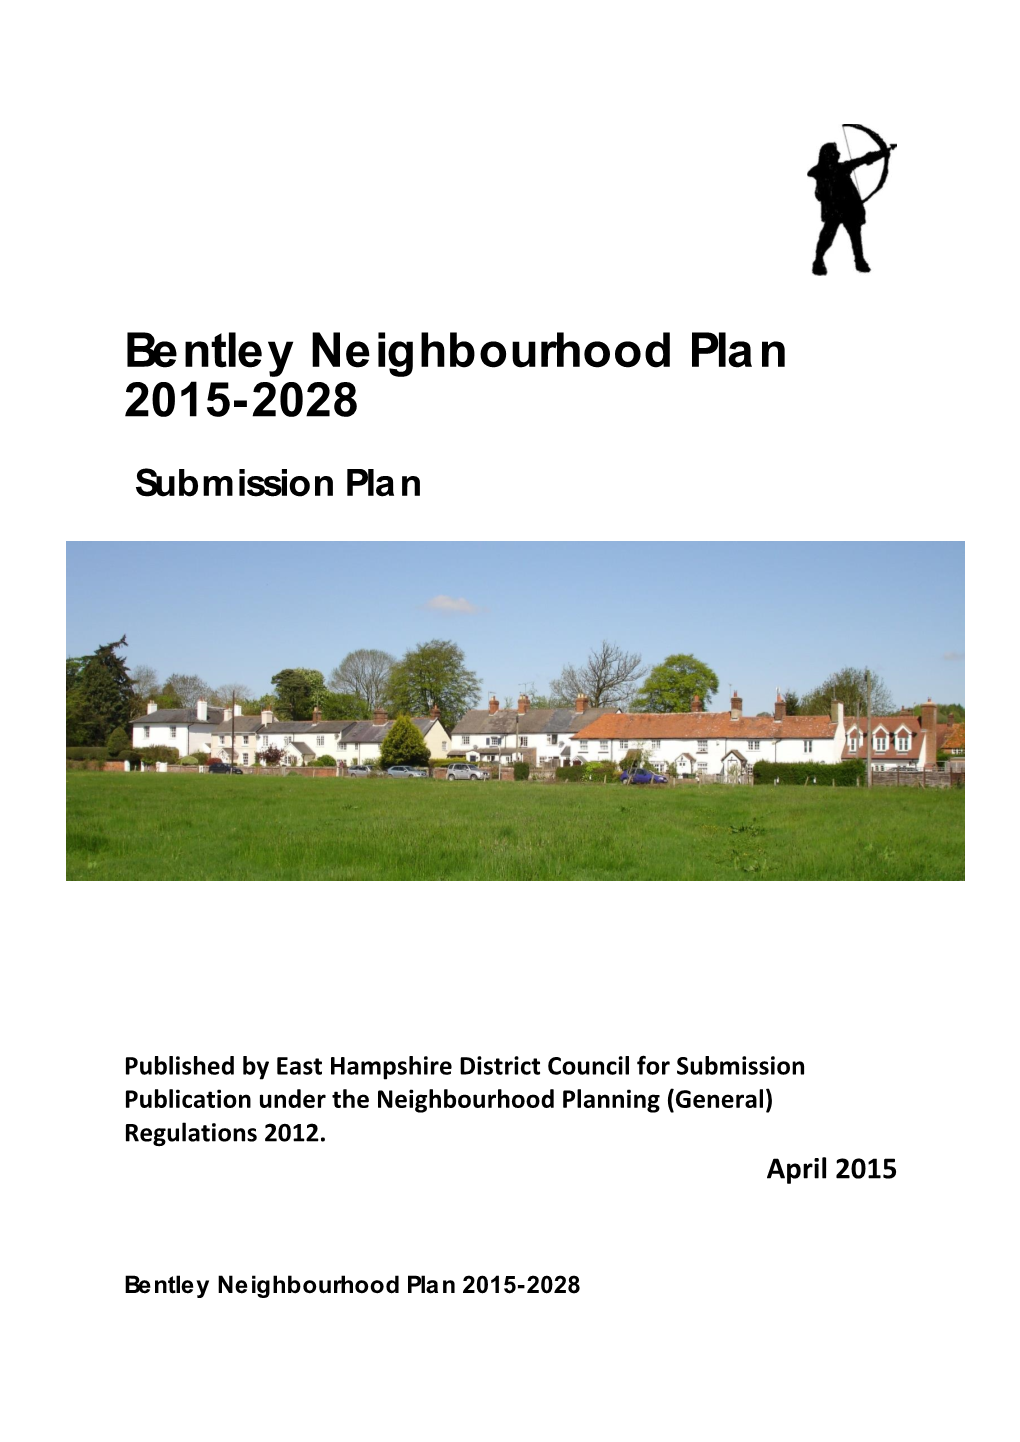 Bentley Neighbourhood Plan 2015-2028